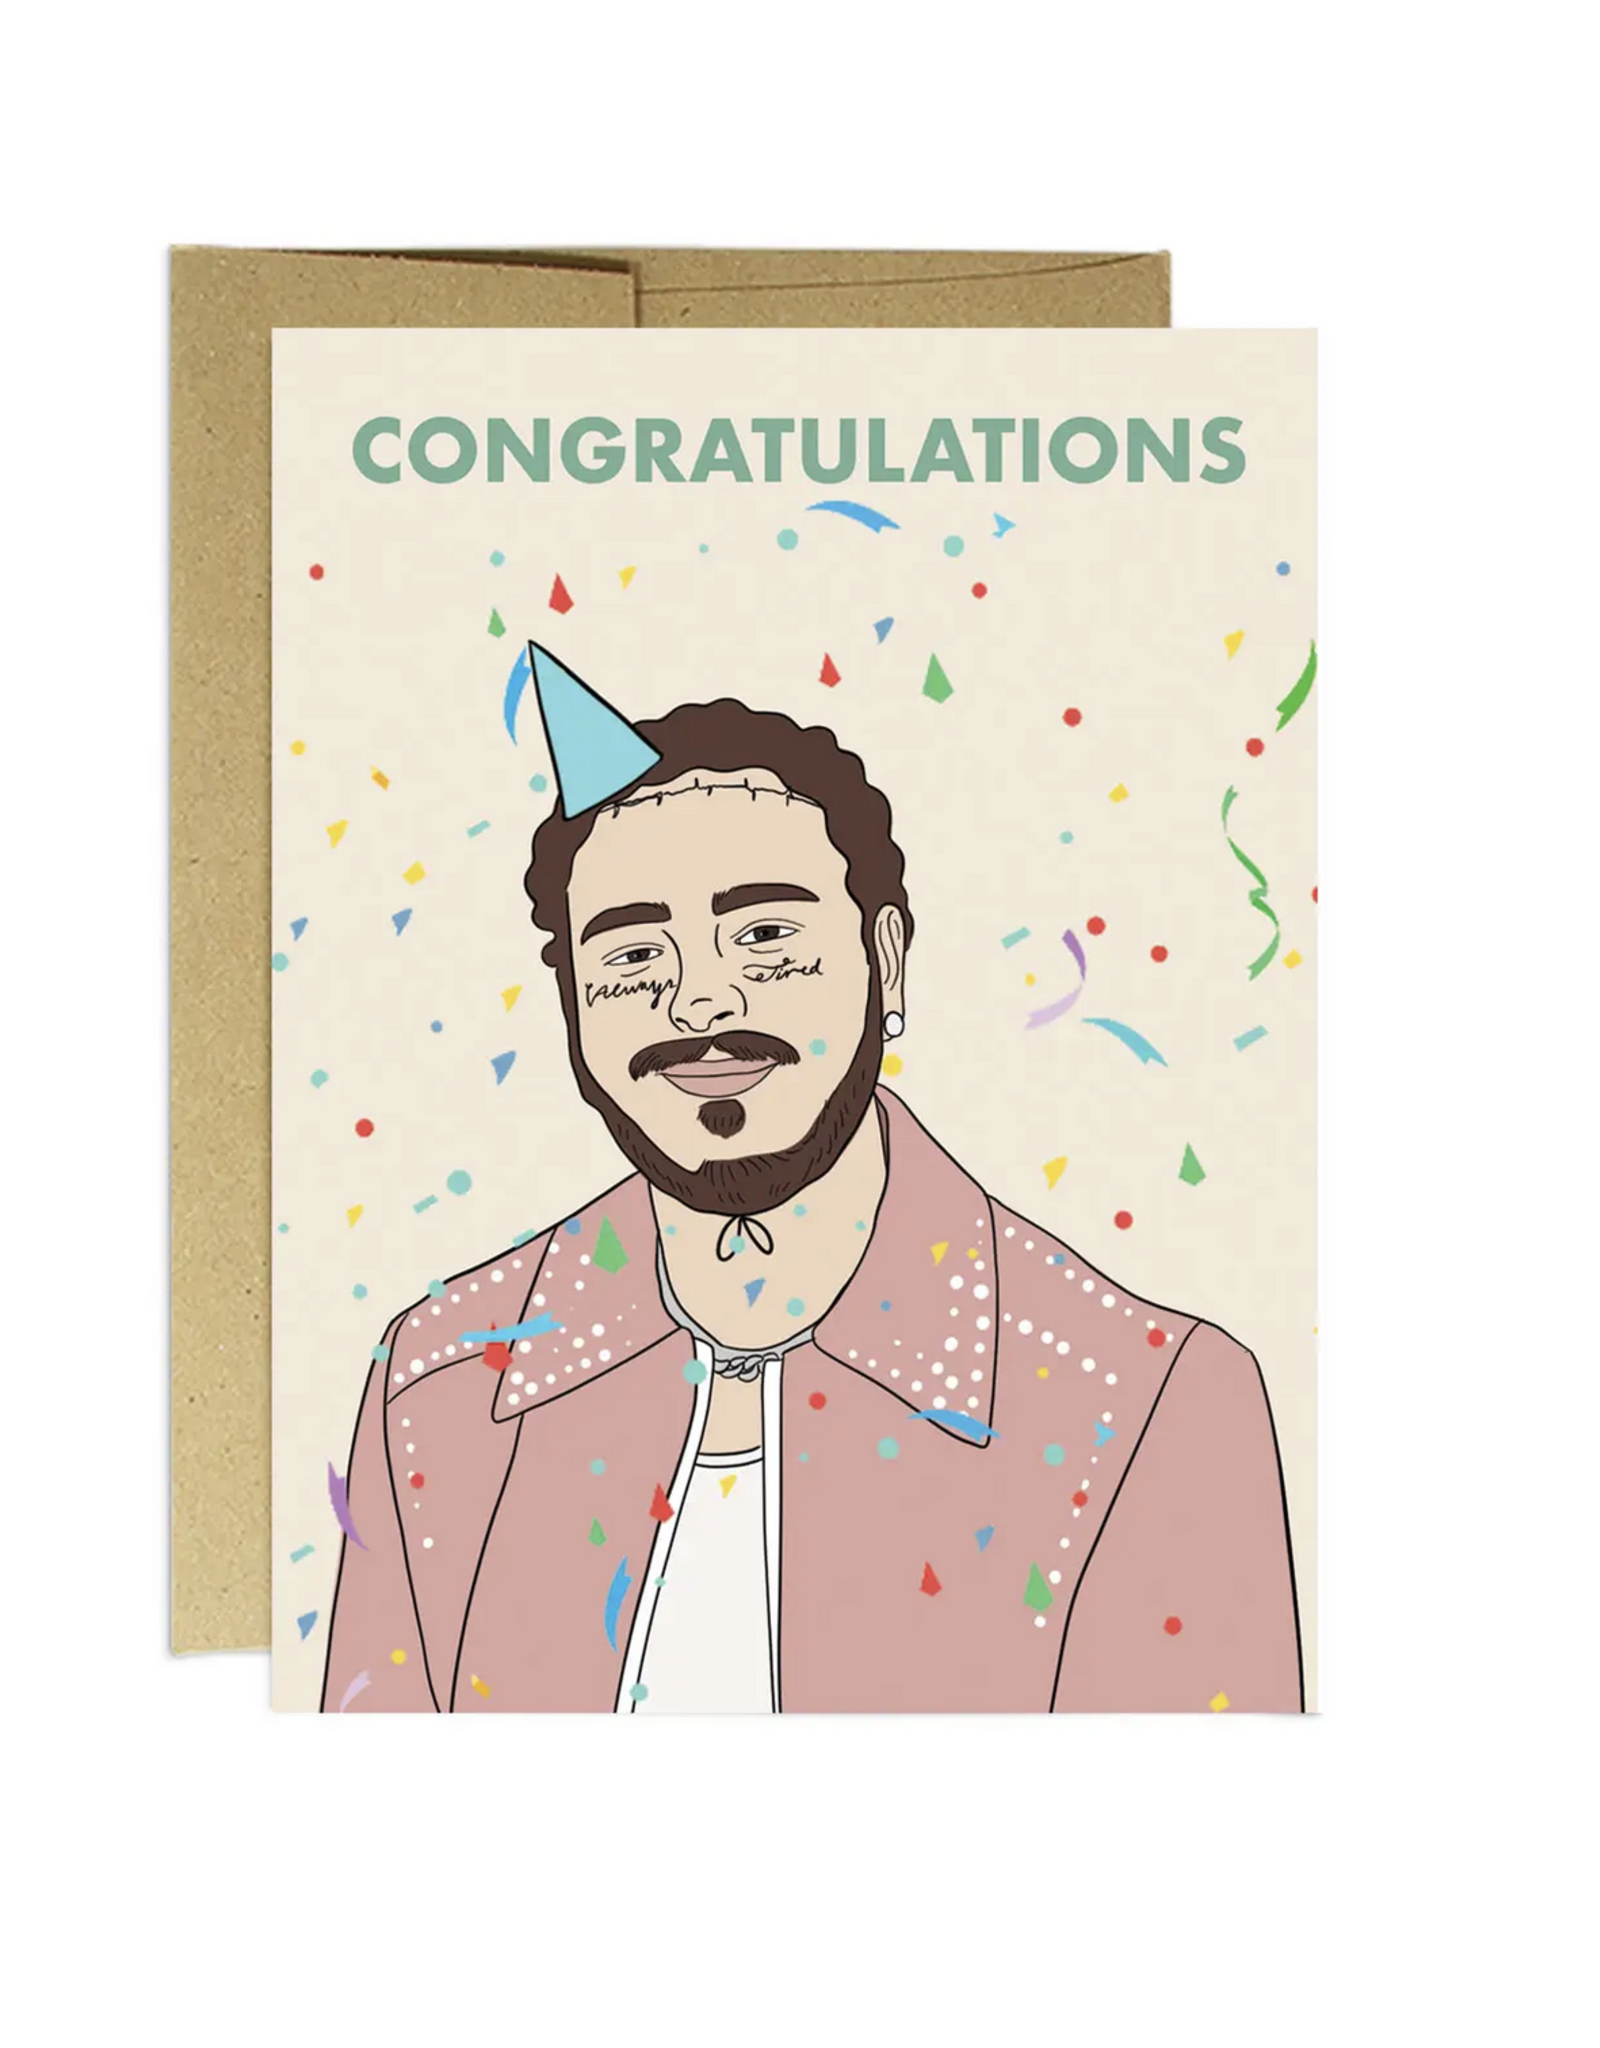 Congratulations Post Malone Greeting Card